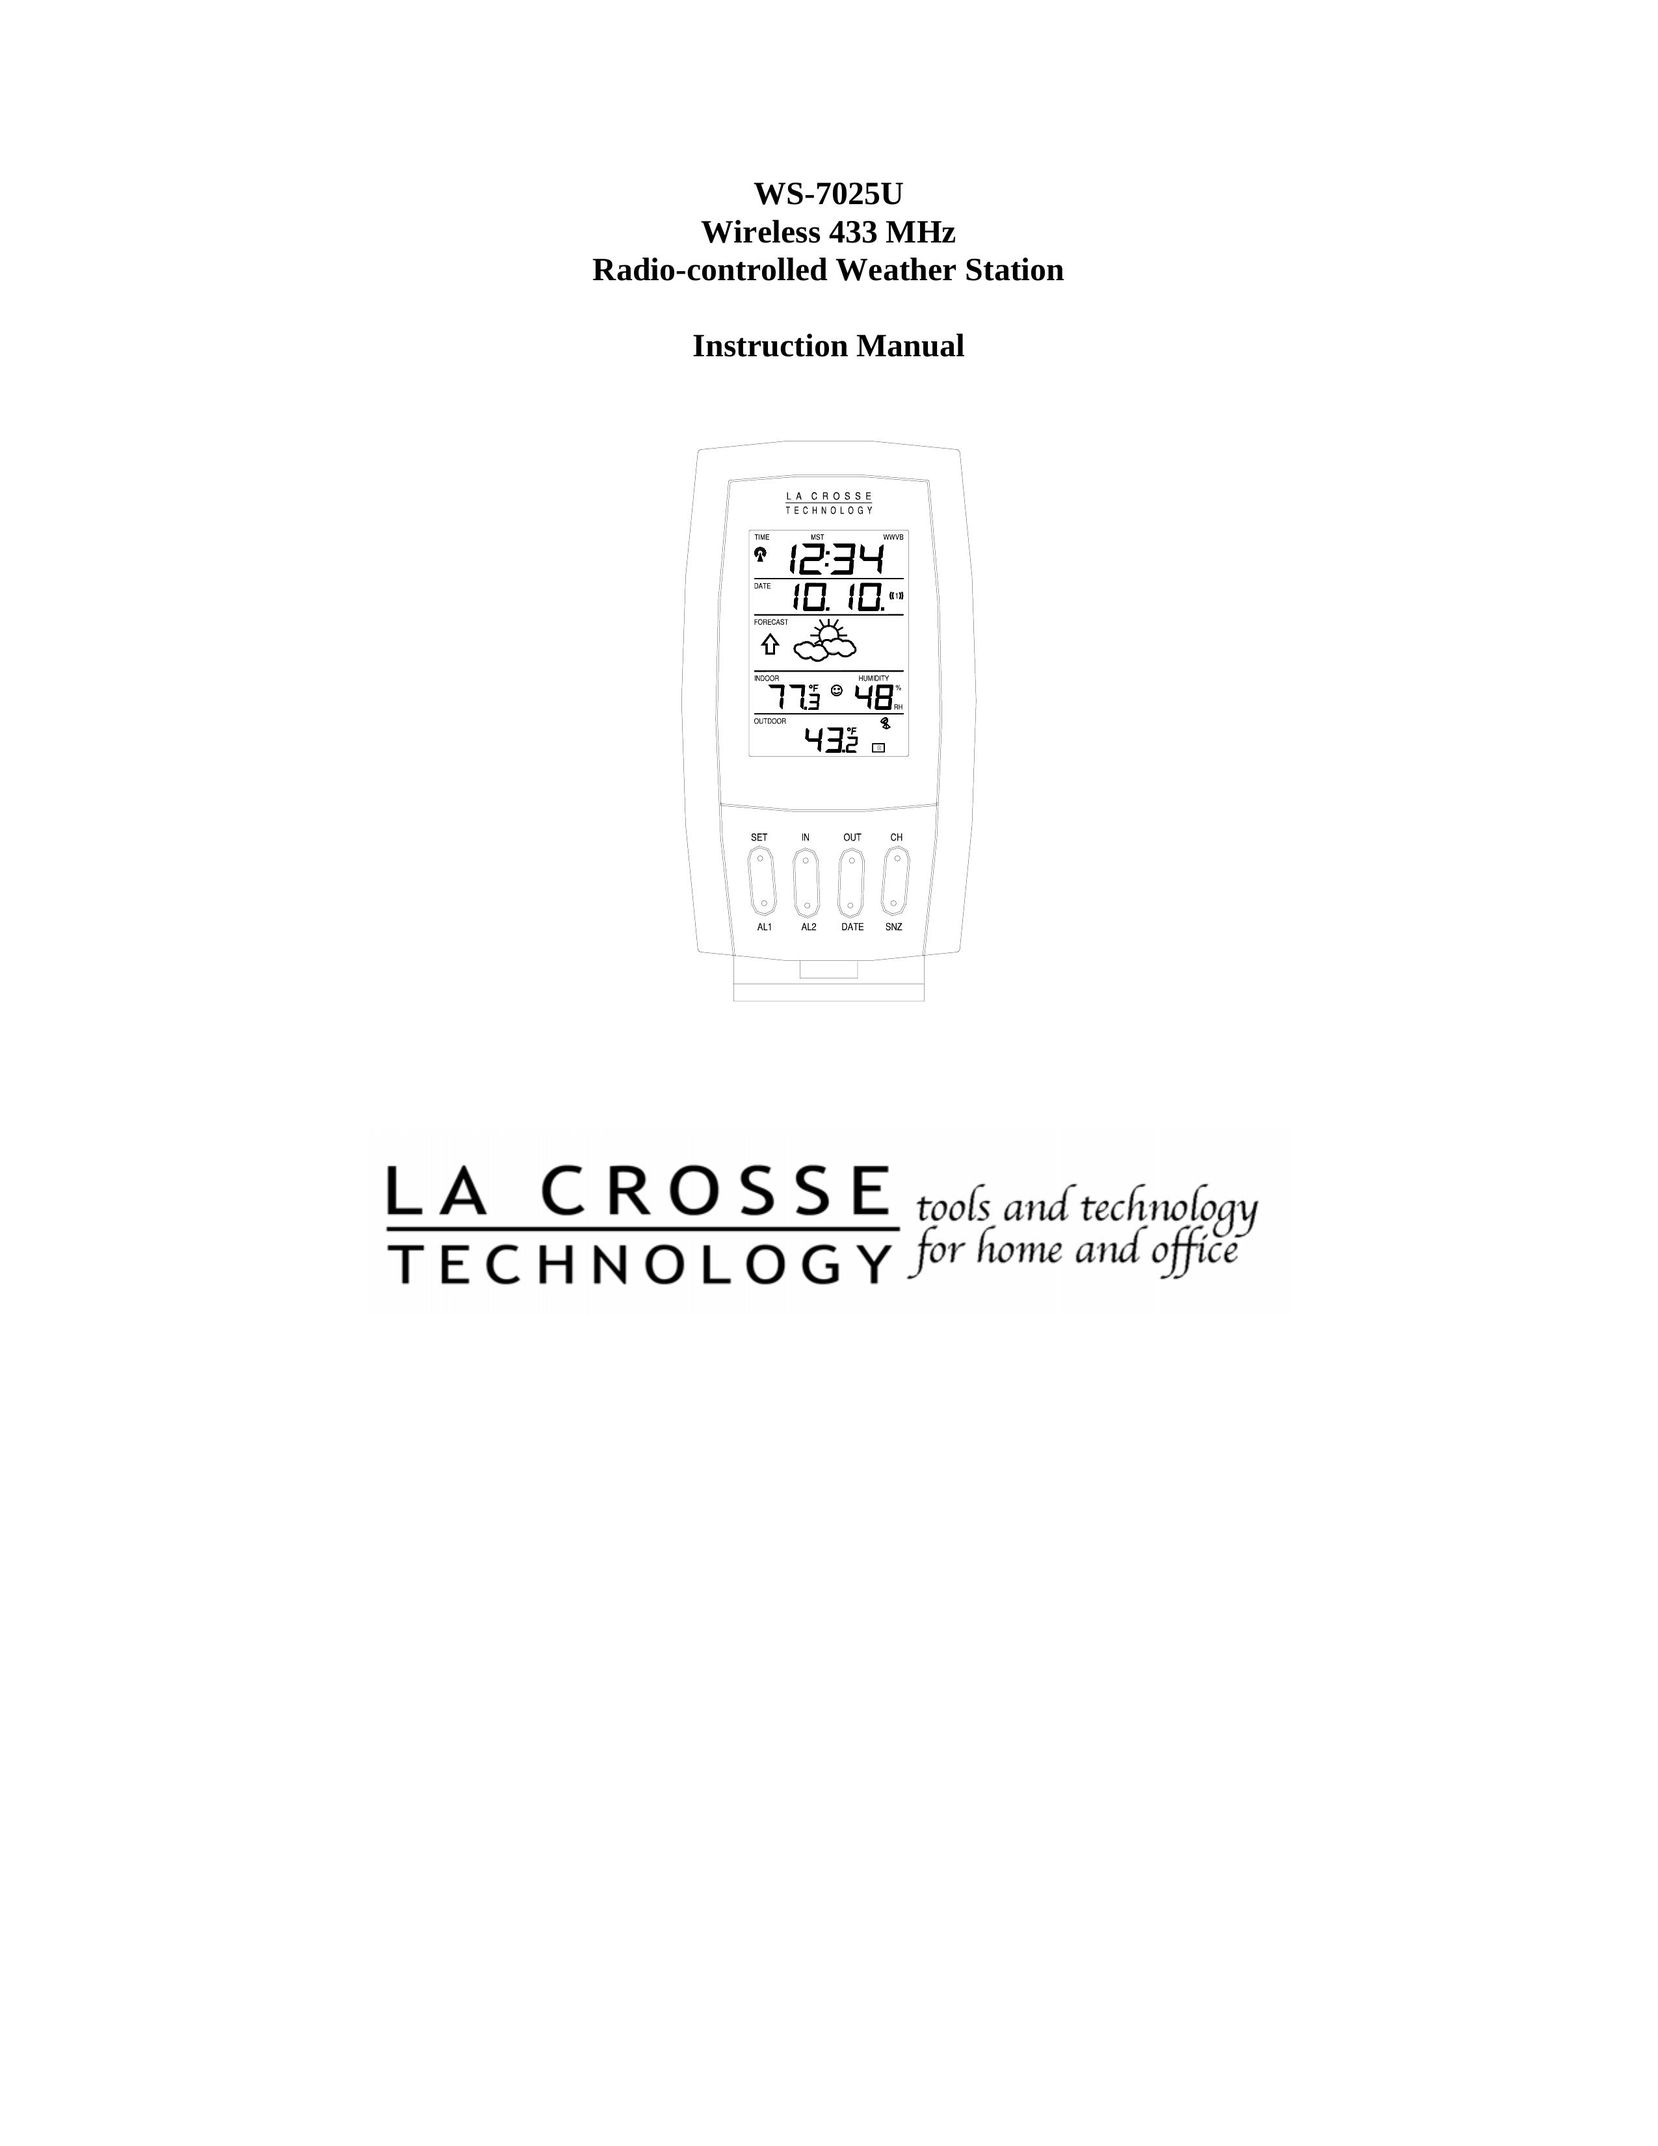 La Crosse Technology WS-7025U Portable Radio User Manual